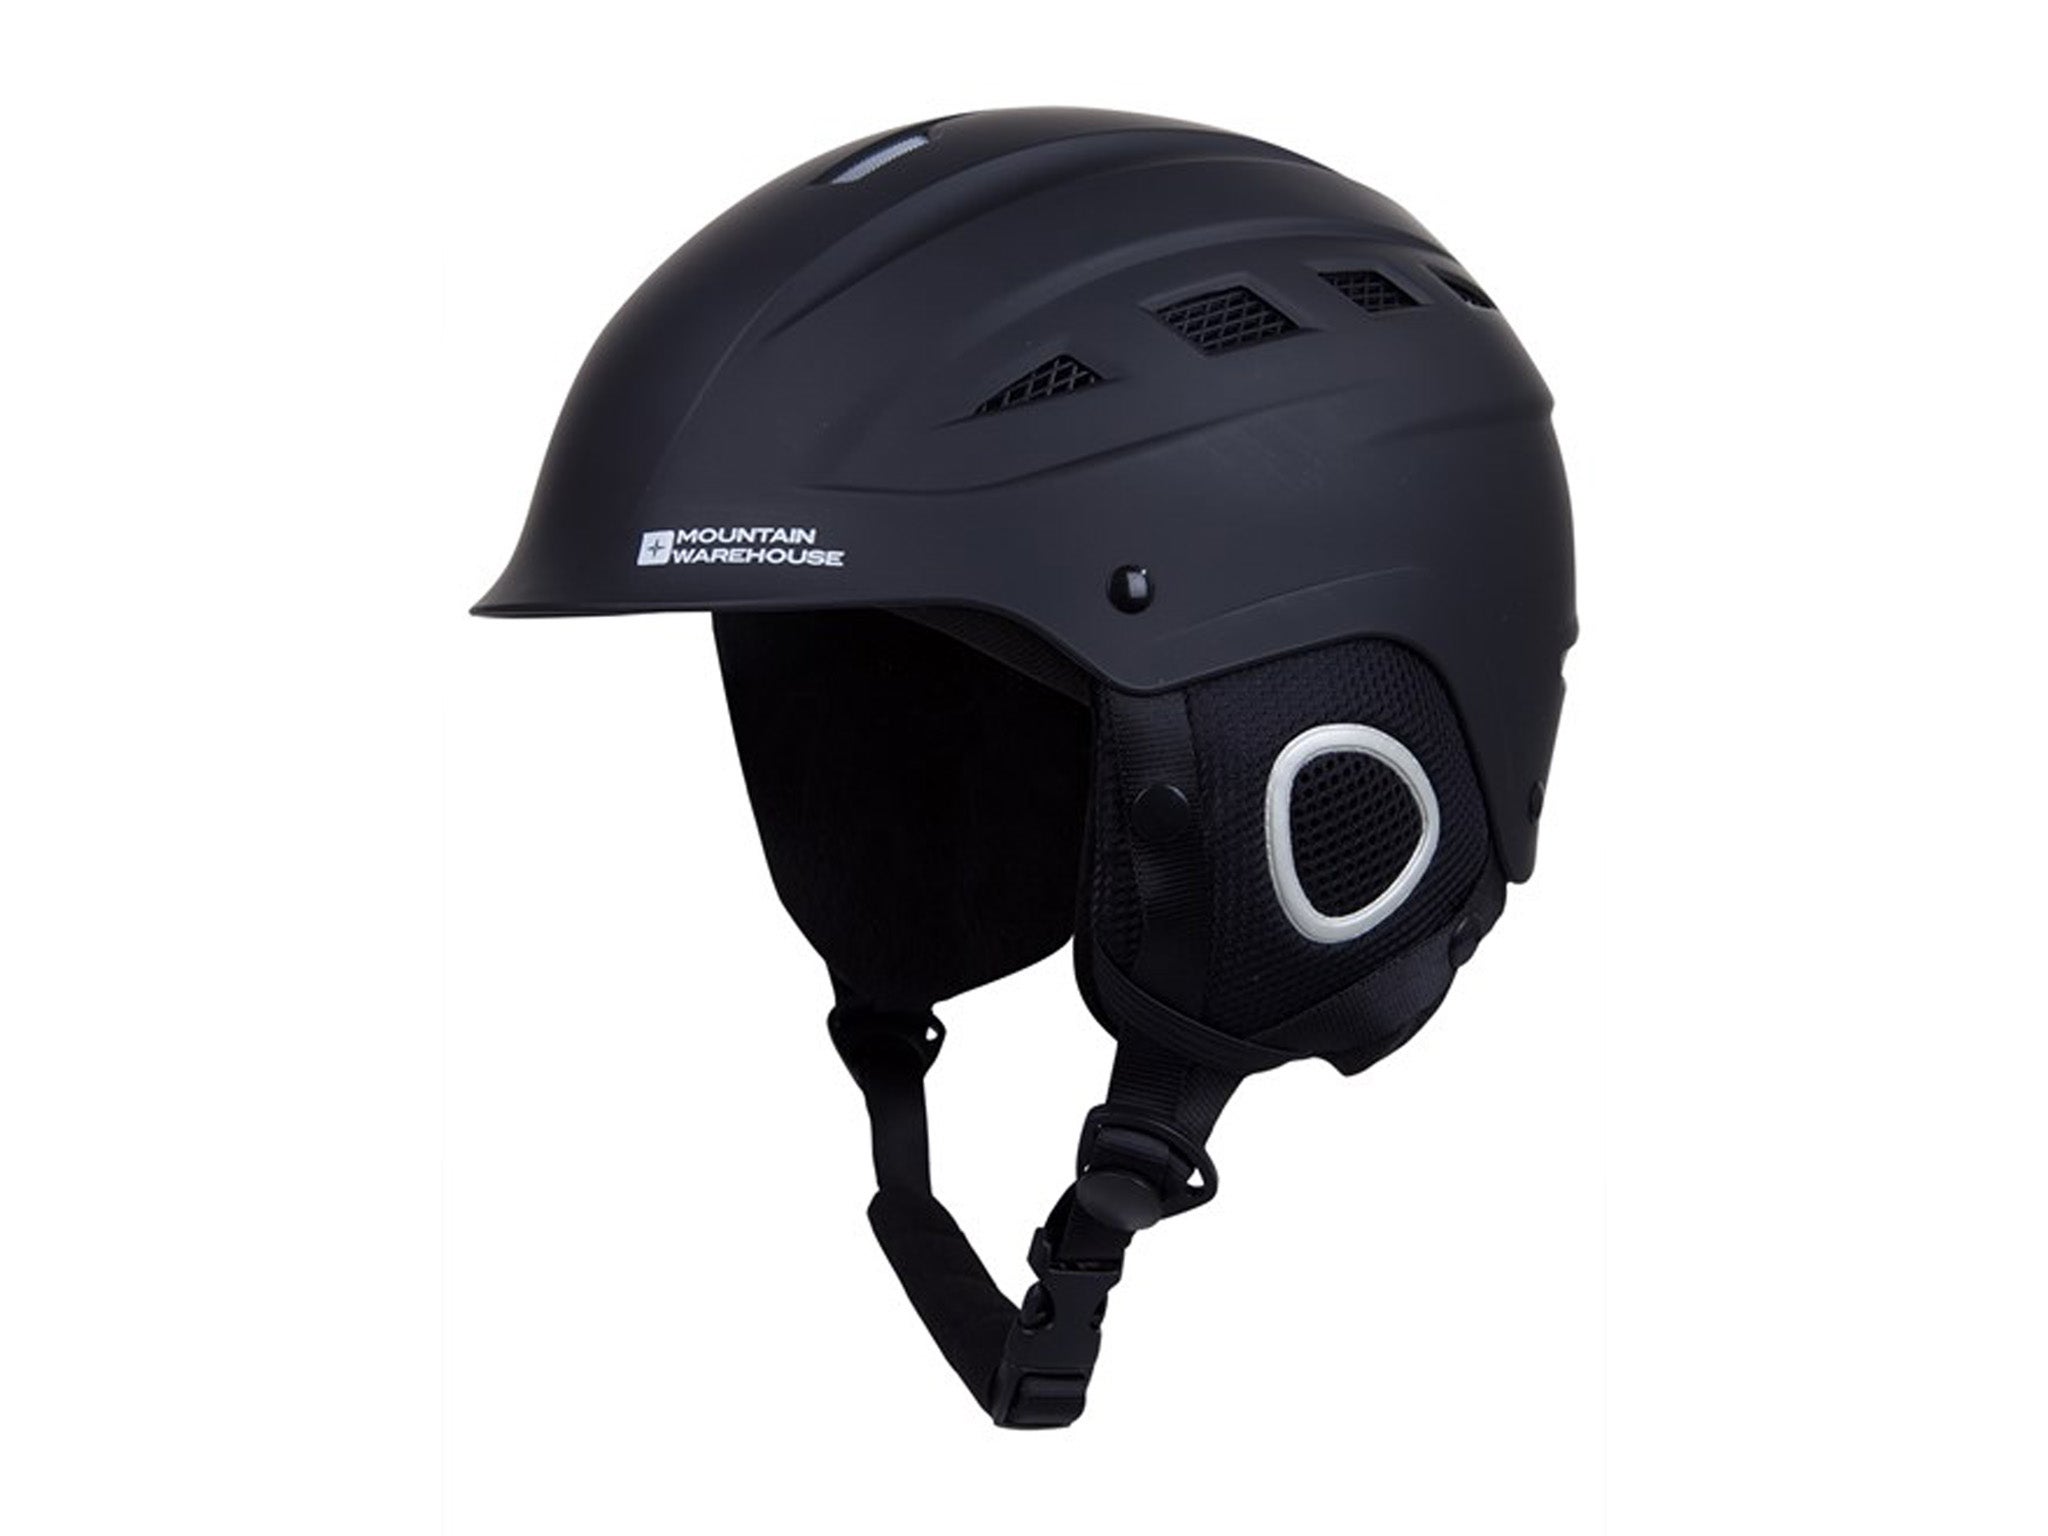 Mountian-warehouse-ski-helmet-Indybest-review